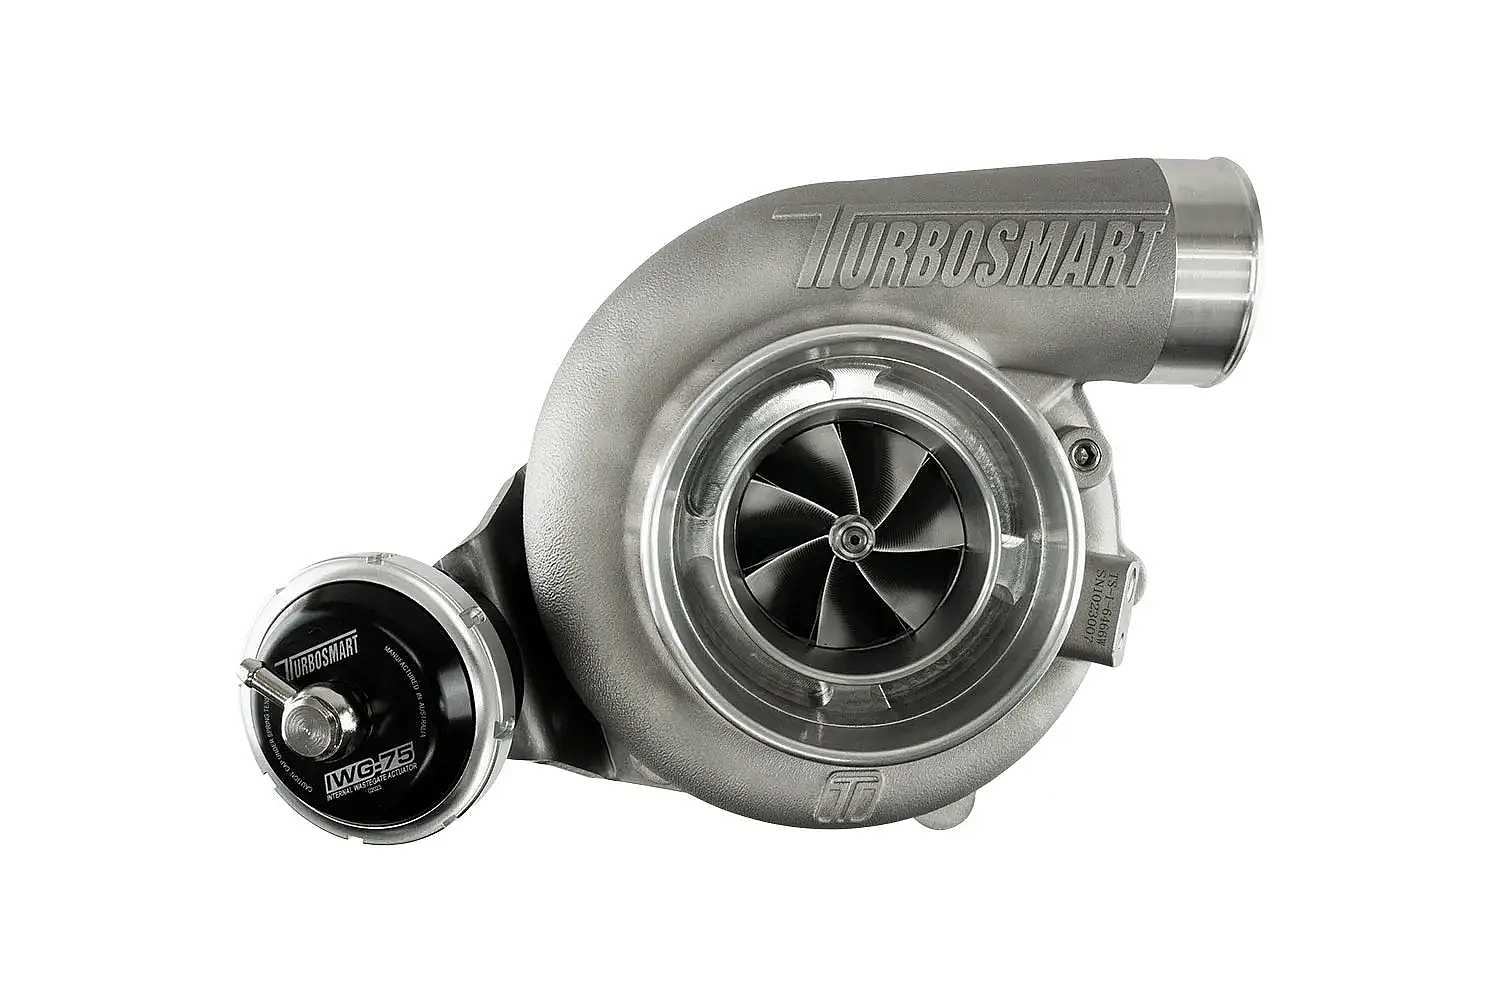 Turbosmart Turbolader 6262 V-Band/V-Band - IWG75 